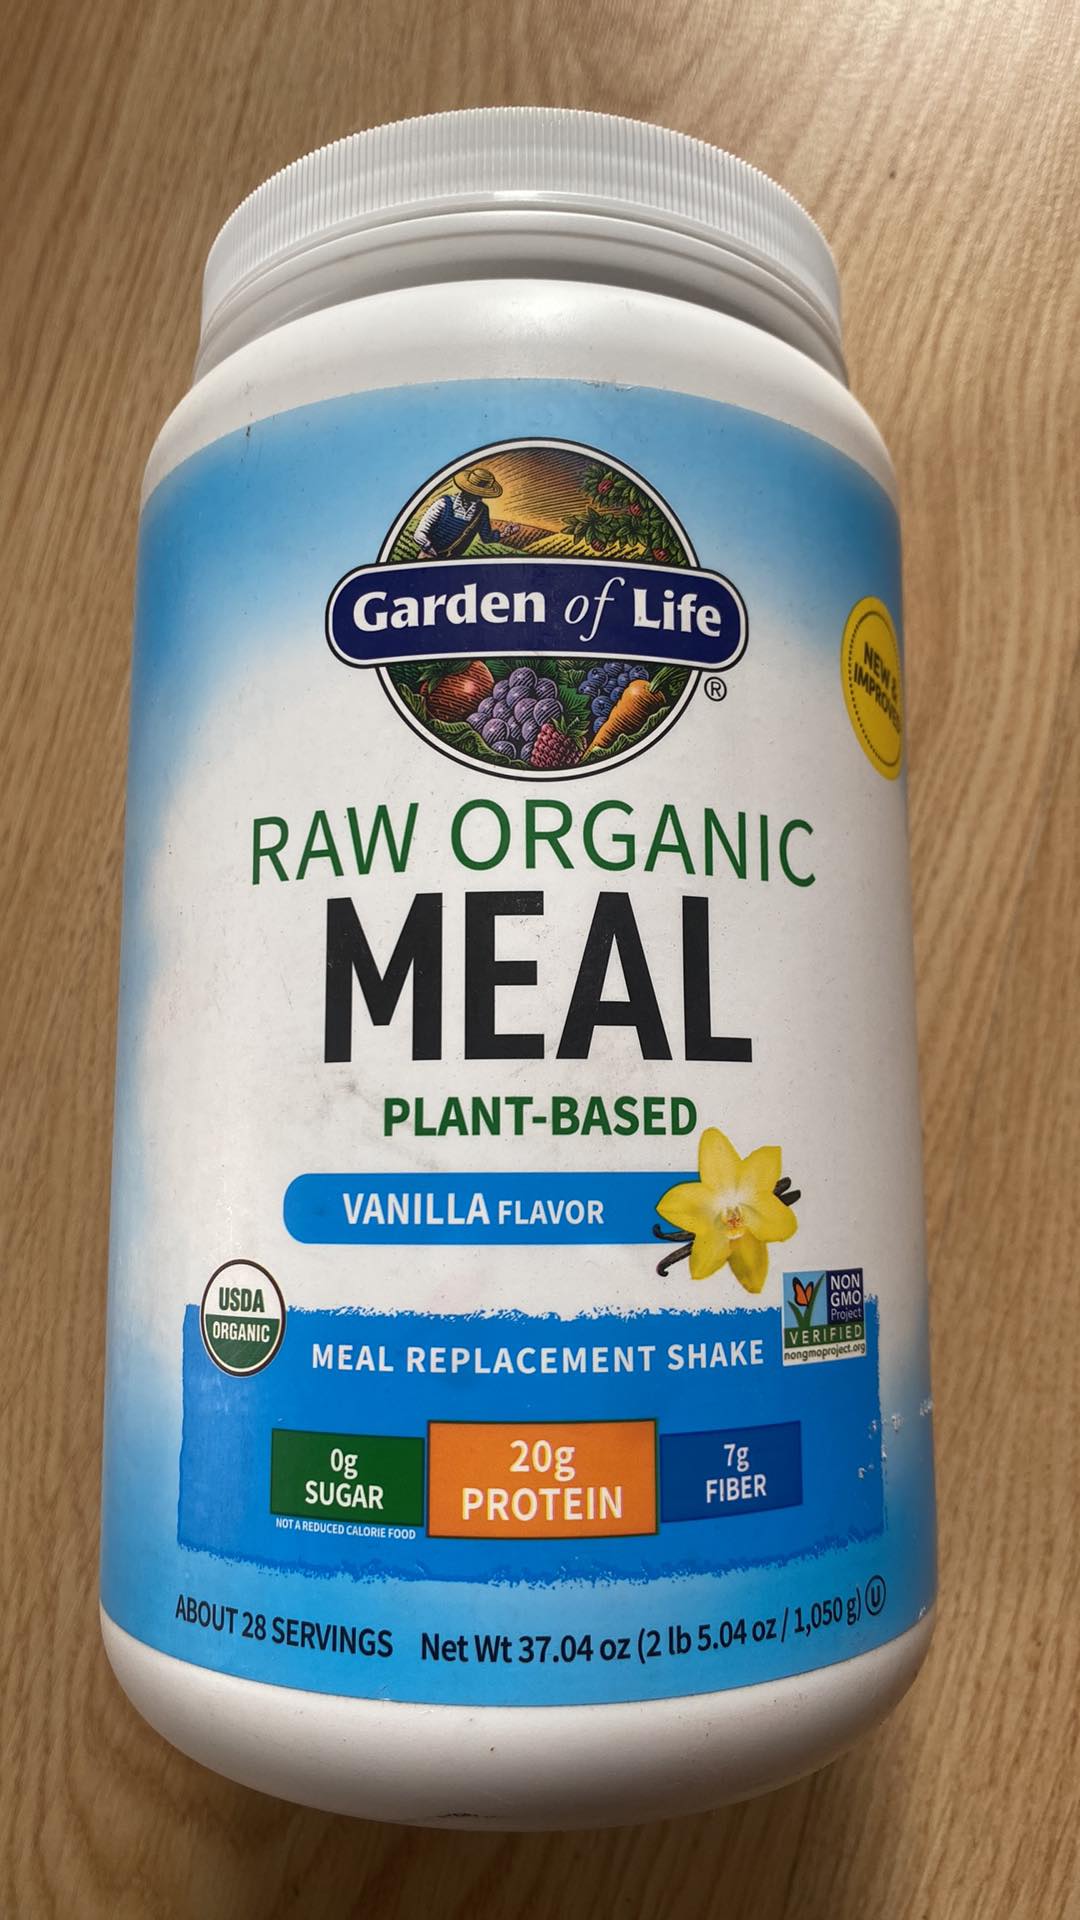 BỘT DINH DƯỠNG HỮU CƠ - THUẦN CHAY Garden of Life Meal Replacement Shake - Organic Raw Plant Based Protein Powder, Pro &amp; Prebiotics, Gluten-Free, Non-GMO, KETO, VEGAN, Vanilla 1.050g (37.04oz)